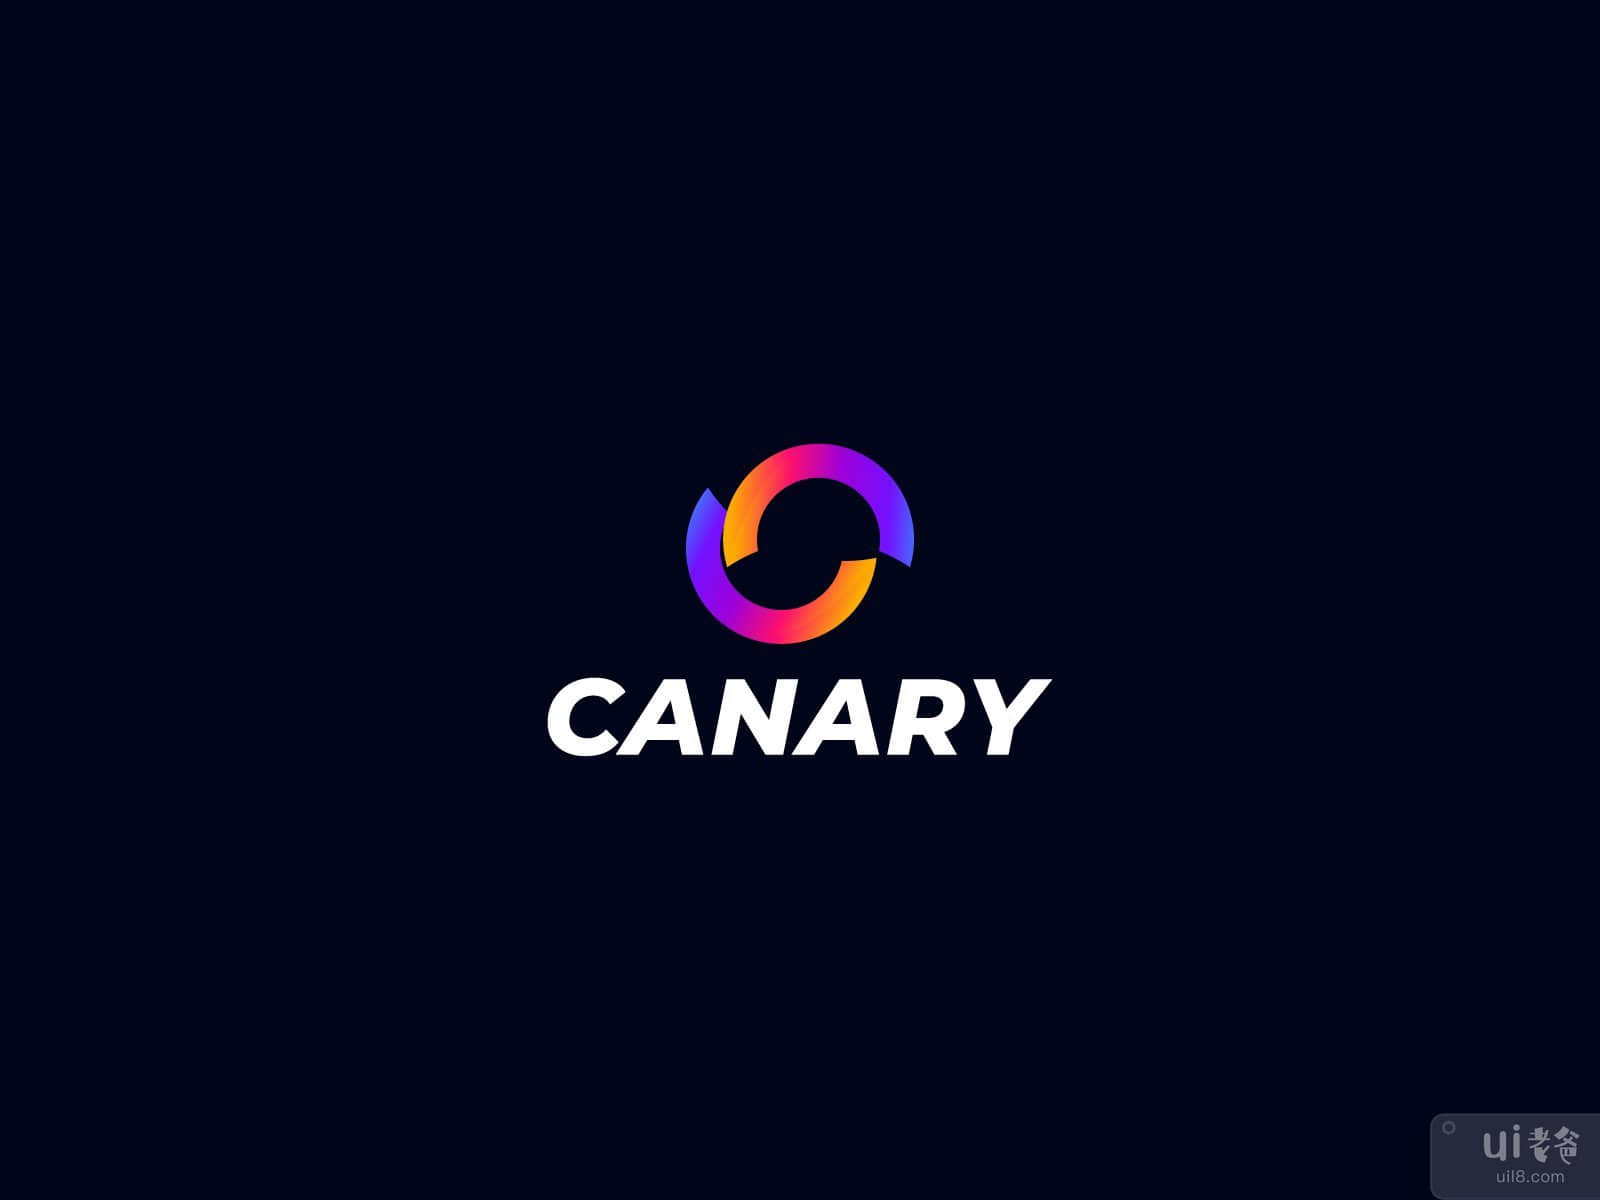 Cannary 现代标志设计 - 鸟类公司标志品牌(Cannary Modern Logo Design - Birds Company Logo Branding)插图2